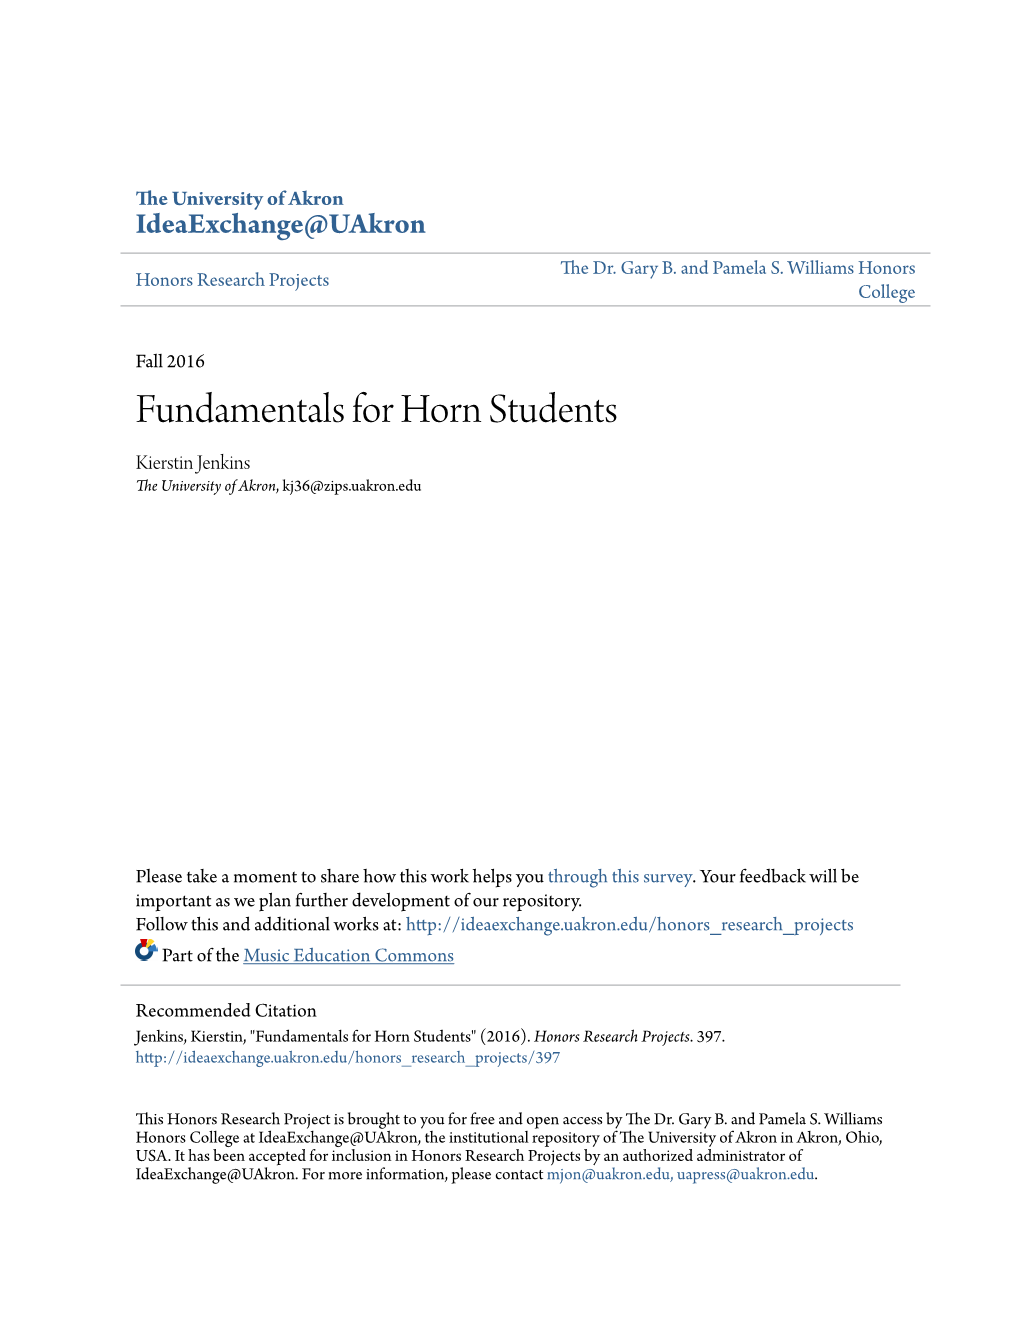 Fundamentals for Horn Students Kierstin Jenkins the University of Akron, Kj36@Zips.Uakron.Edu